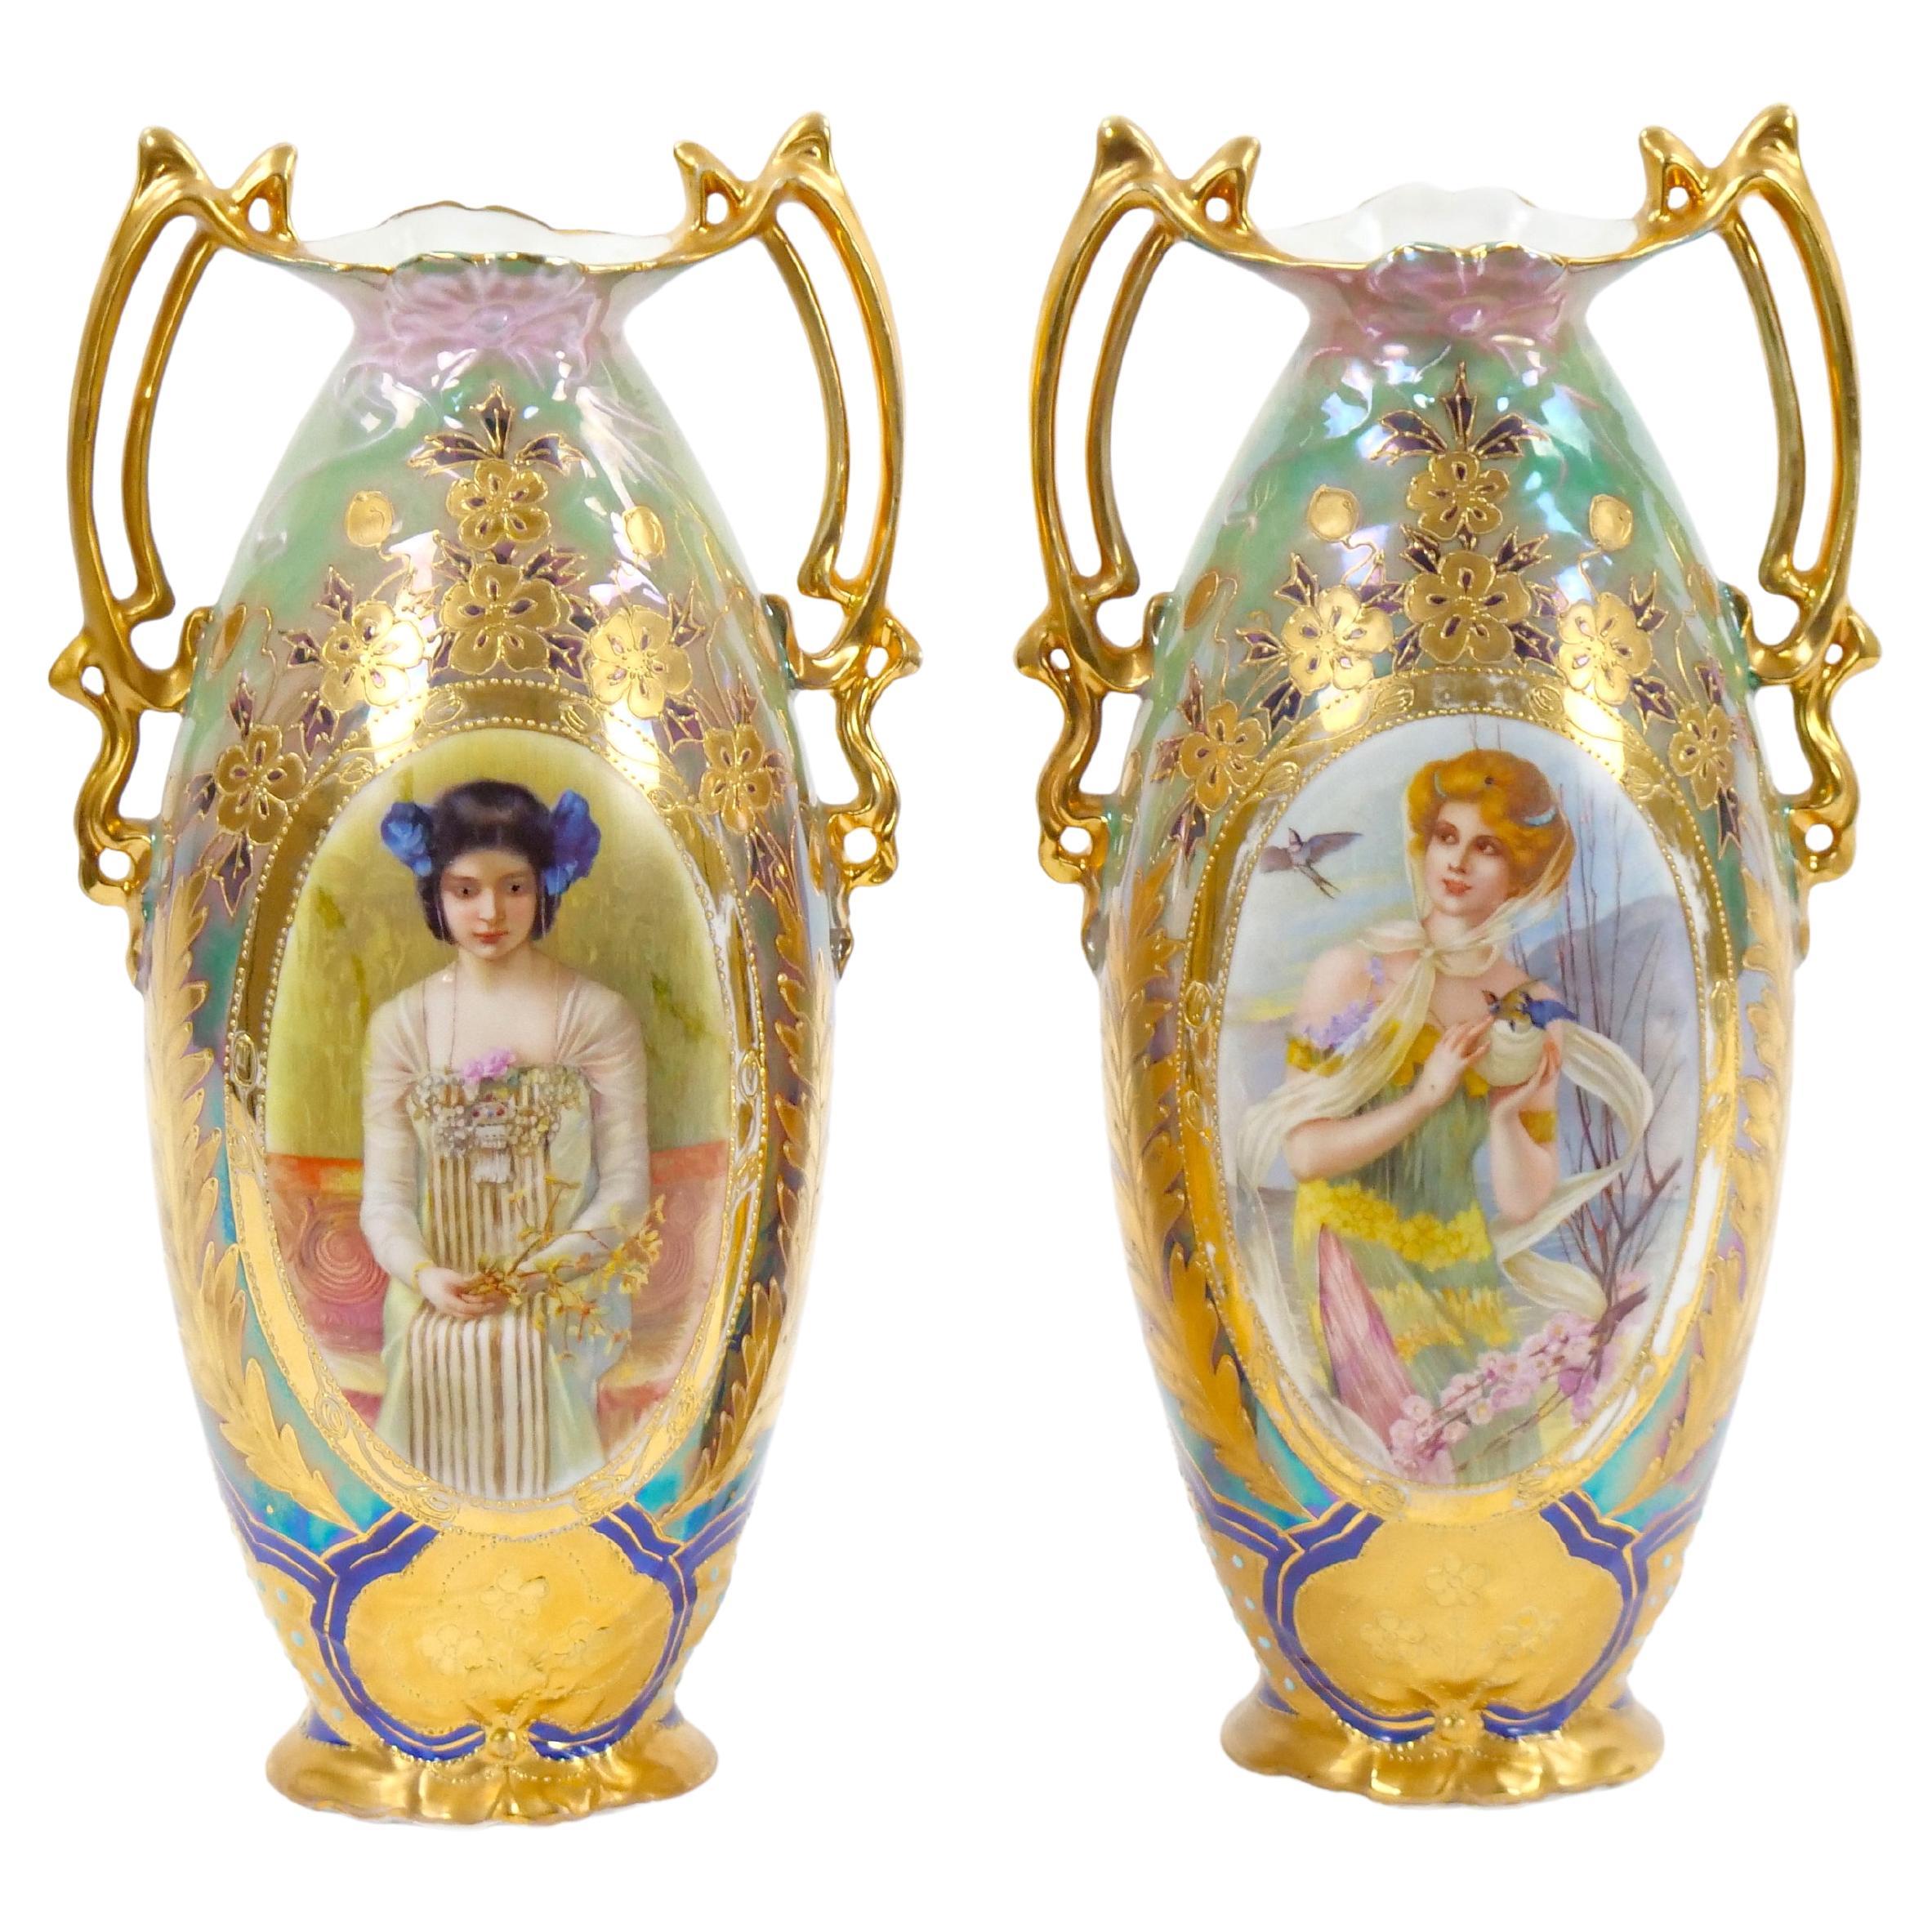 Early 20th Century German Art Nouveau Hand-Painted / Gilt Porcelain Vases For Sale